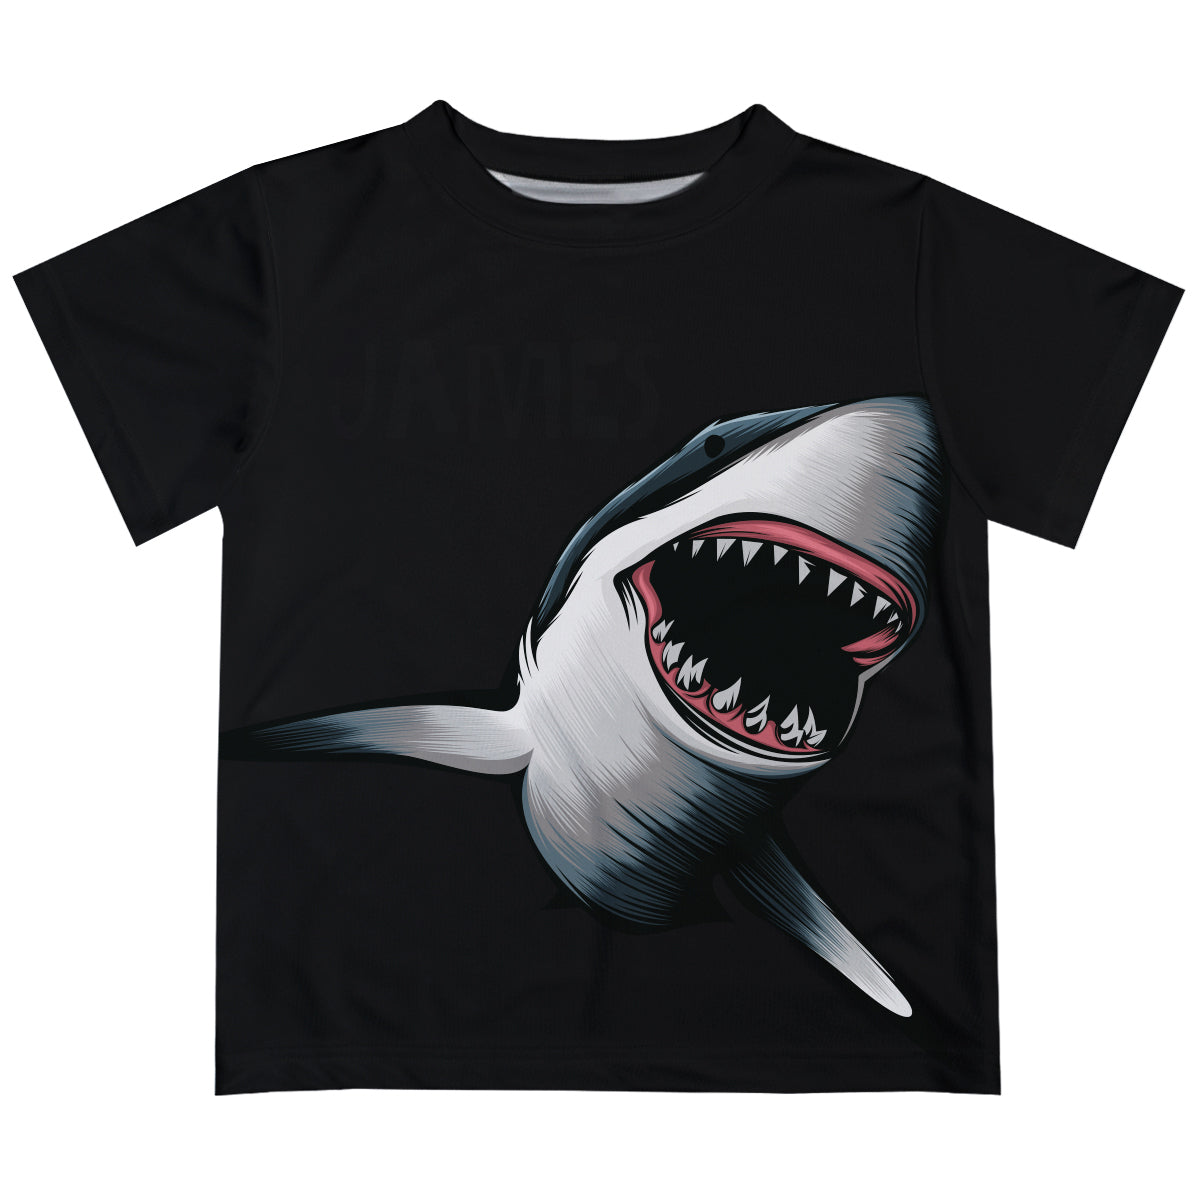 Shark Name Black Short Sleeve Tee Shirt - Wimziy&Co.